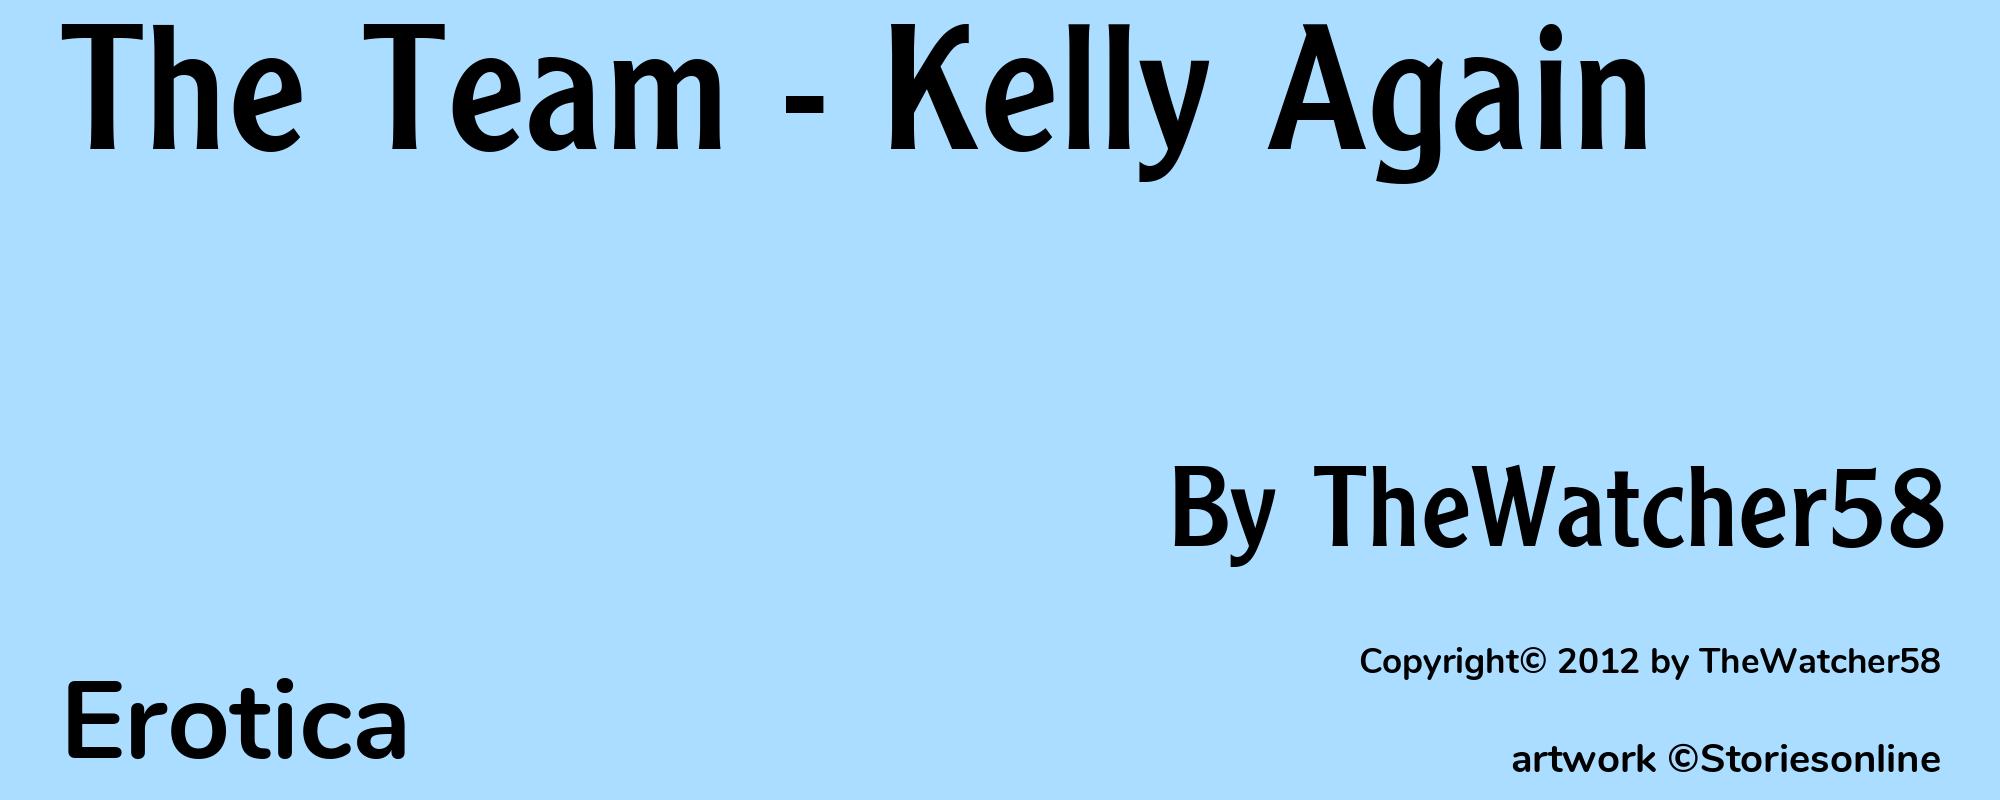 The Team - Kelly Again - Cover